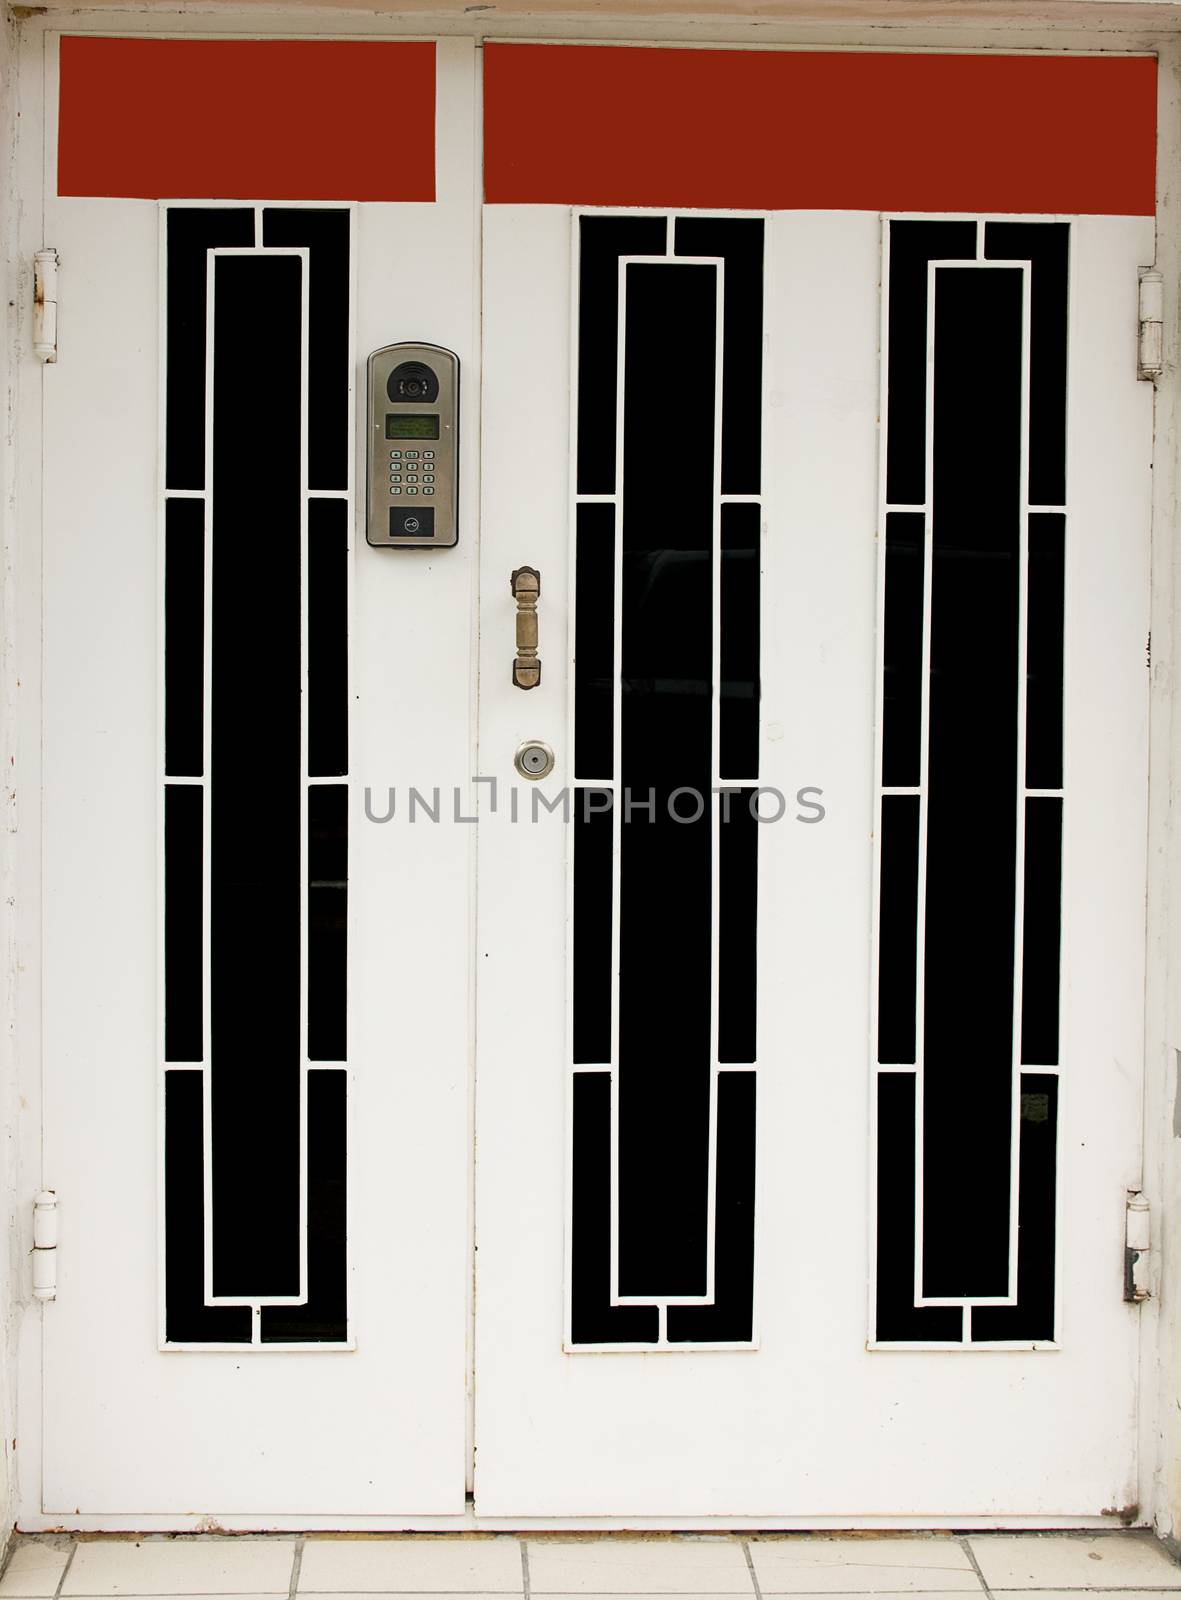 entrance door with intercom by Irina1977